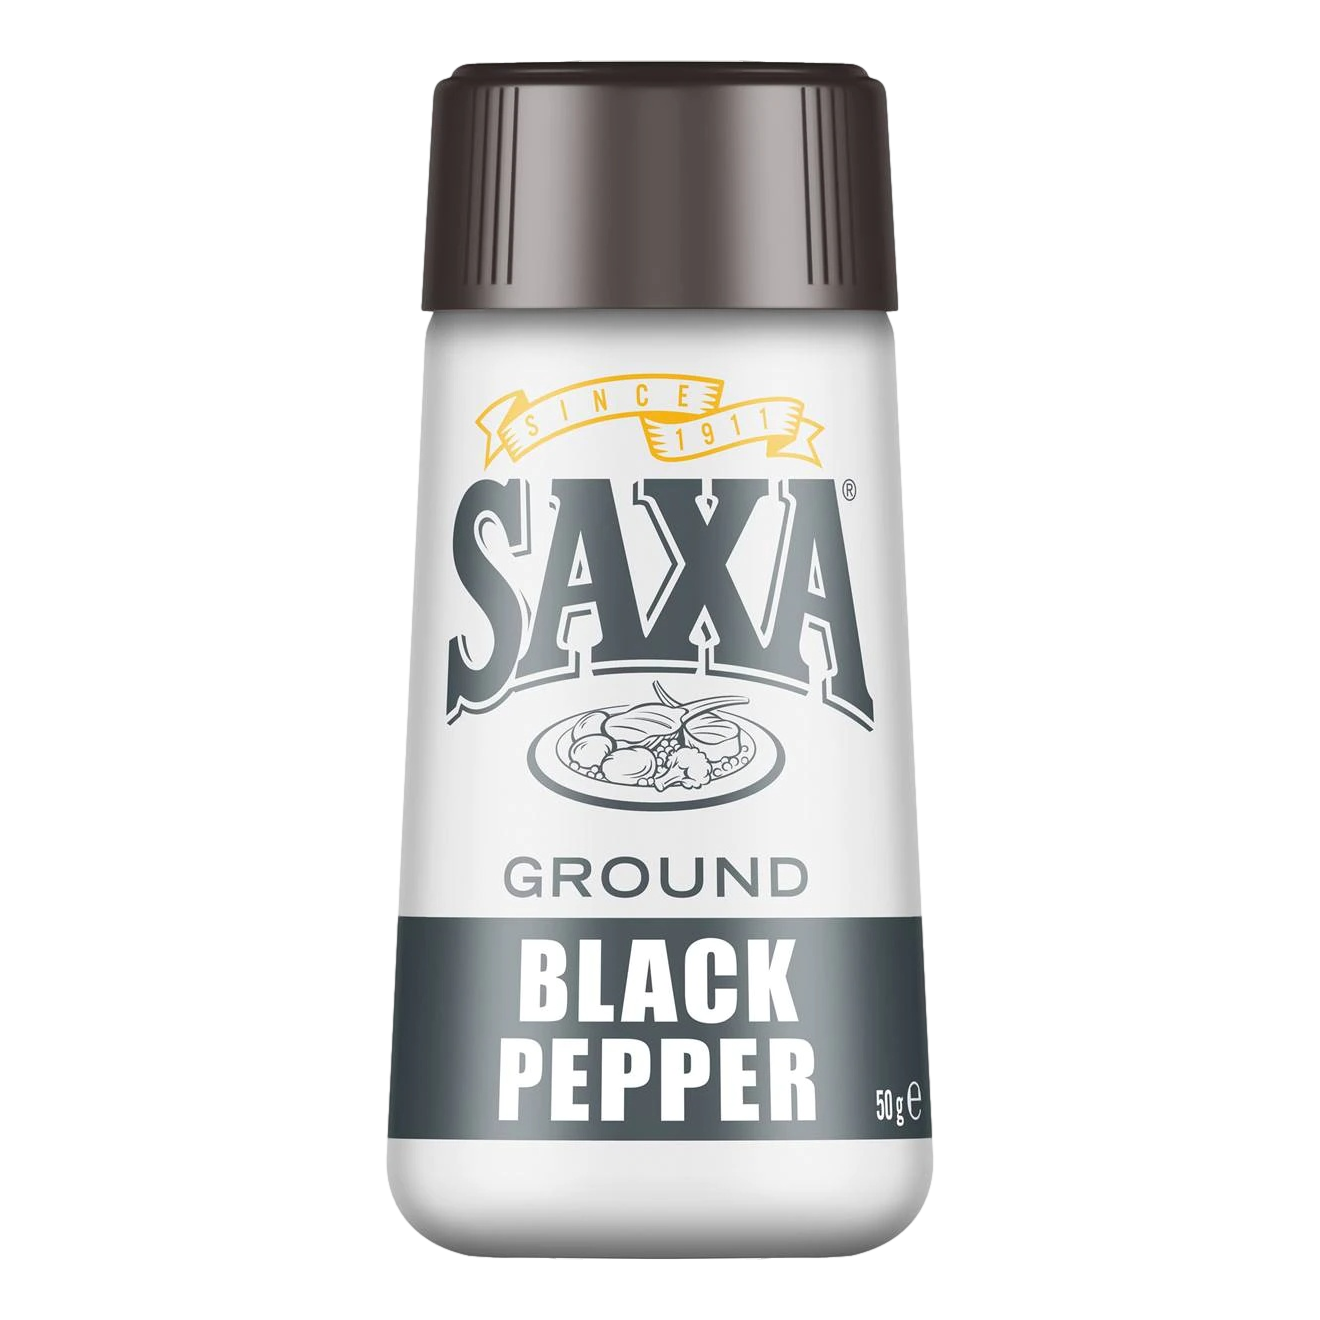 Saxa Black Pepper Ground 50g